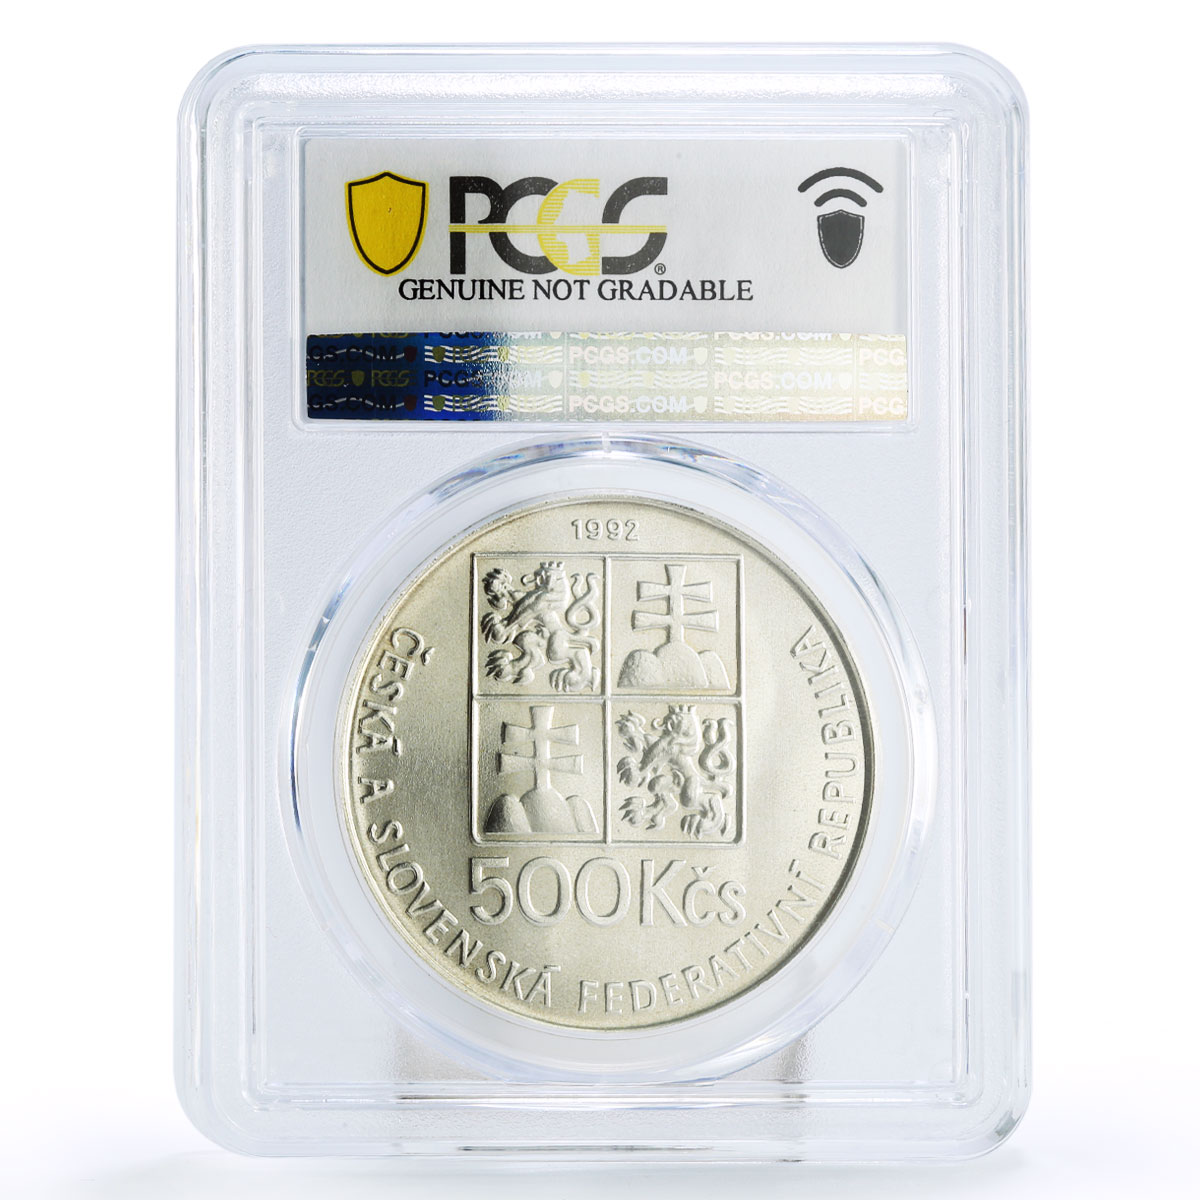 Czechoslovakia 500 korun J.A. Comenius Komensky UNC Detail PCGS silver coin 1992